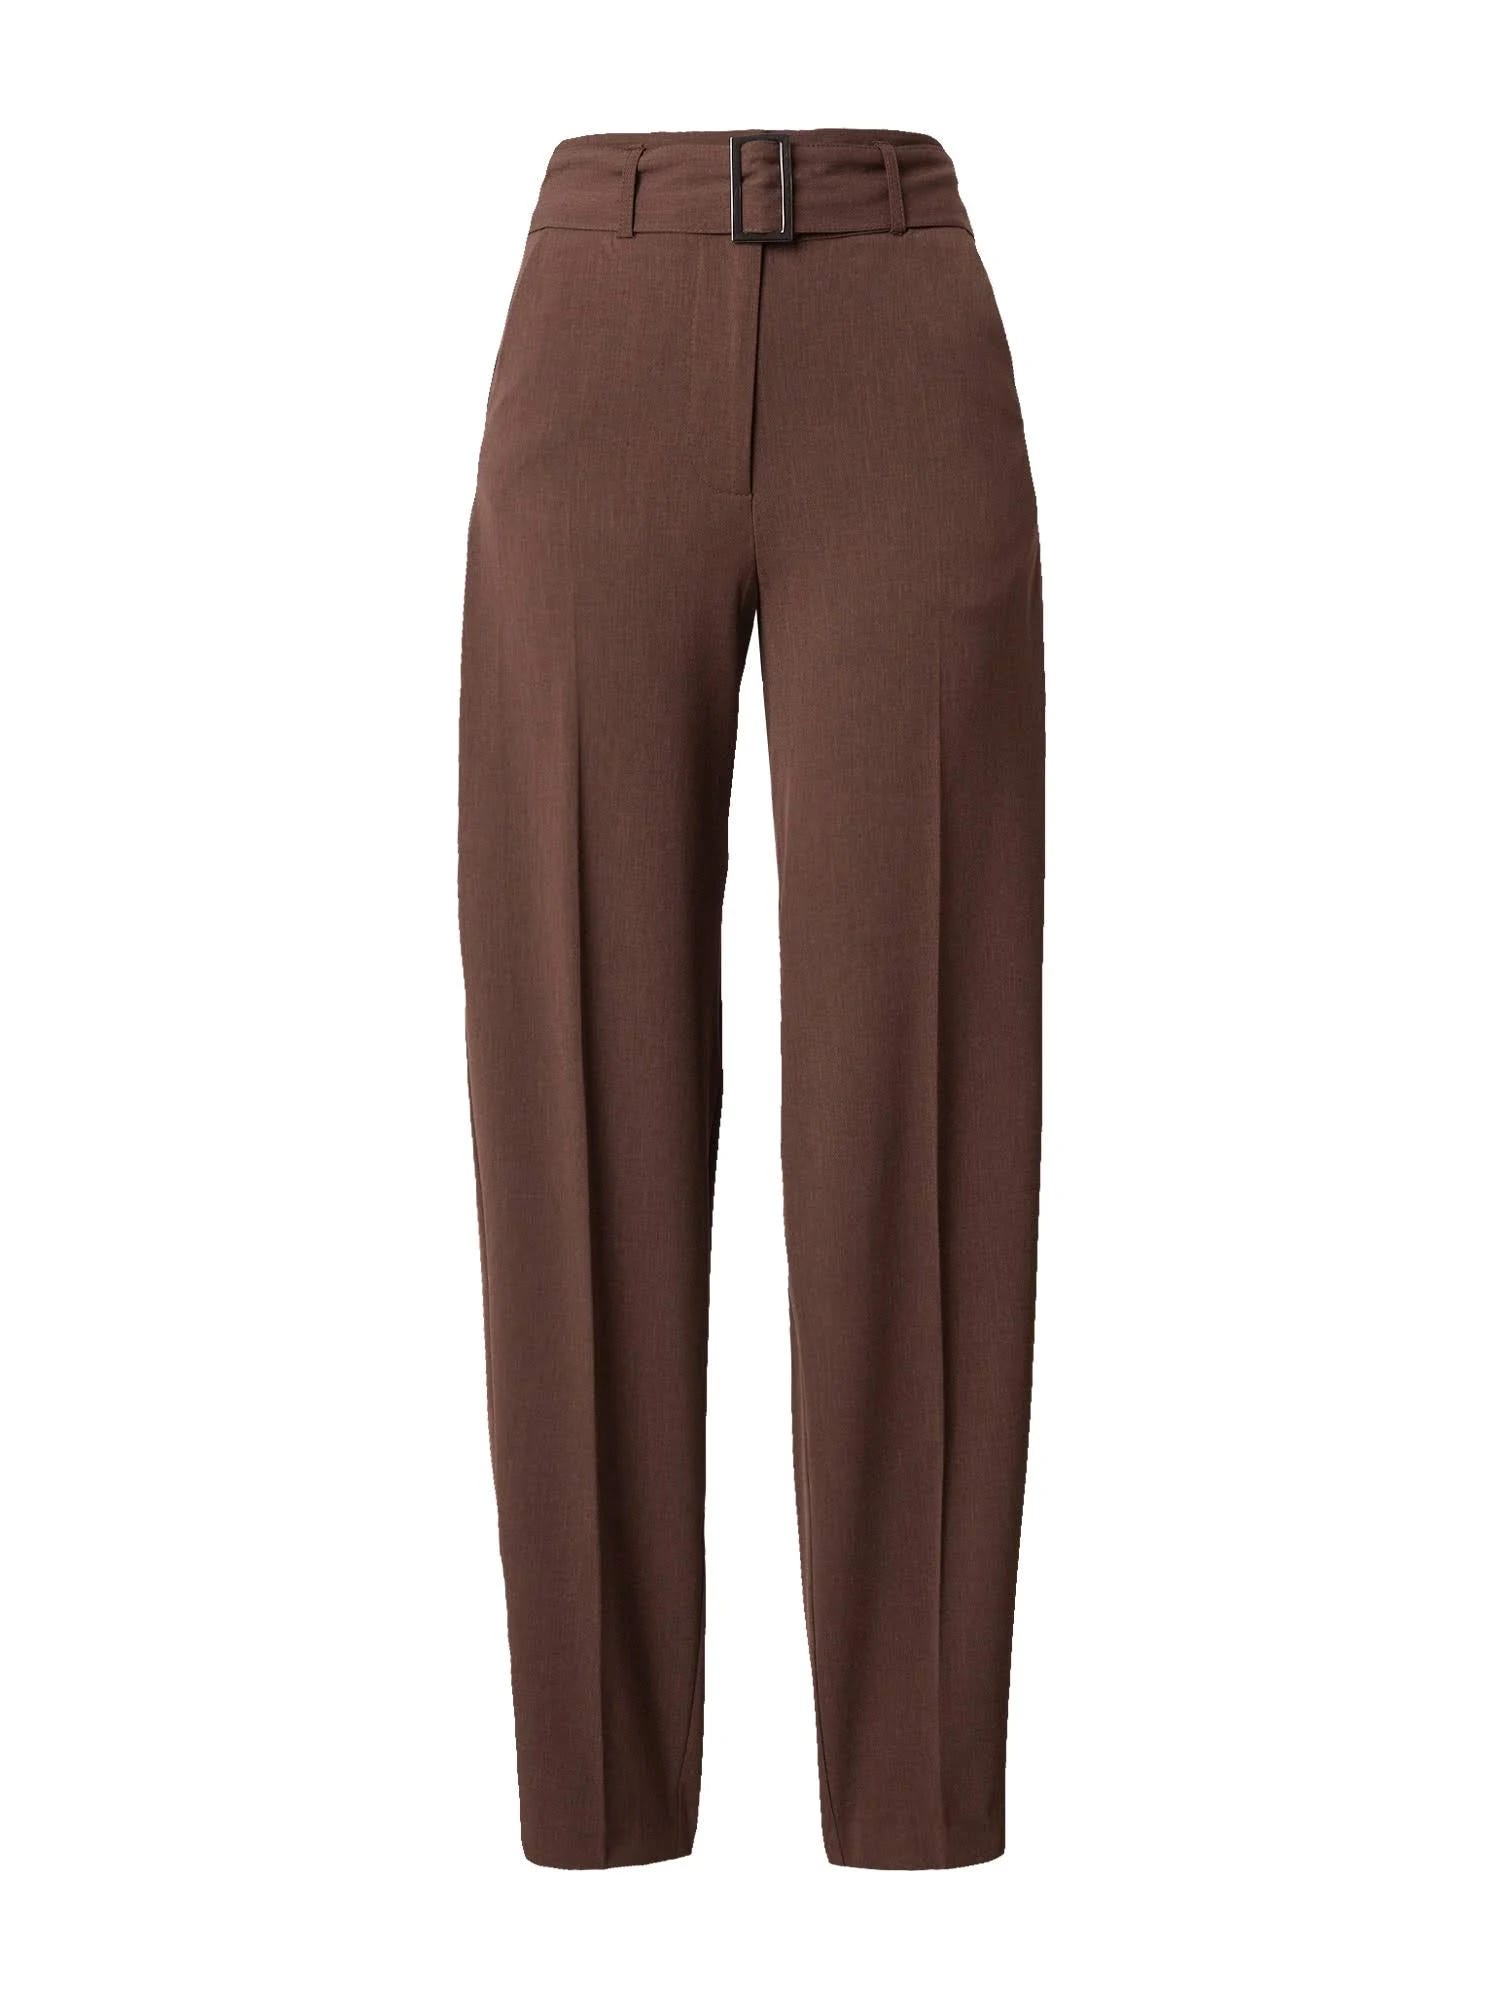 Topshop Chocolate Brown Belted Peg Pants | Image